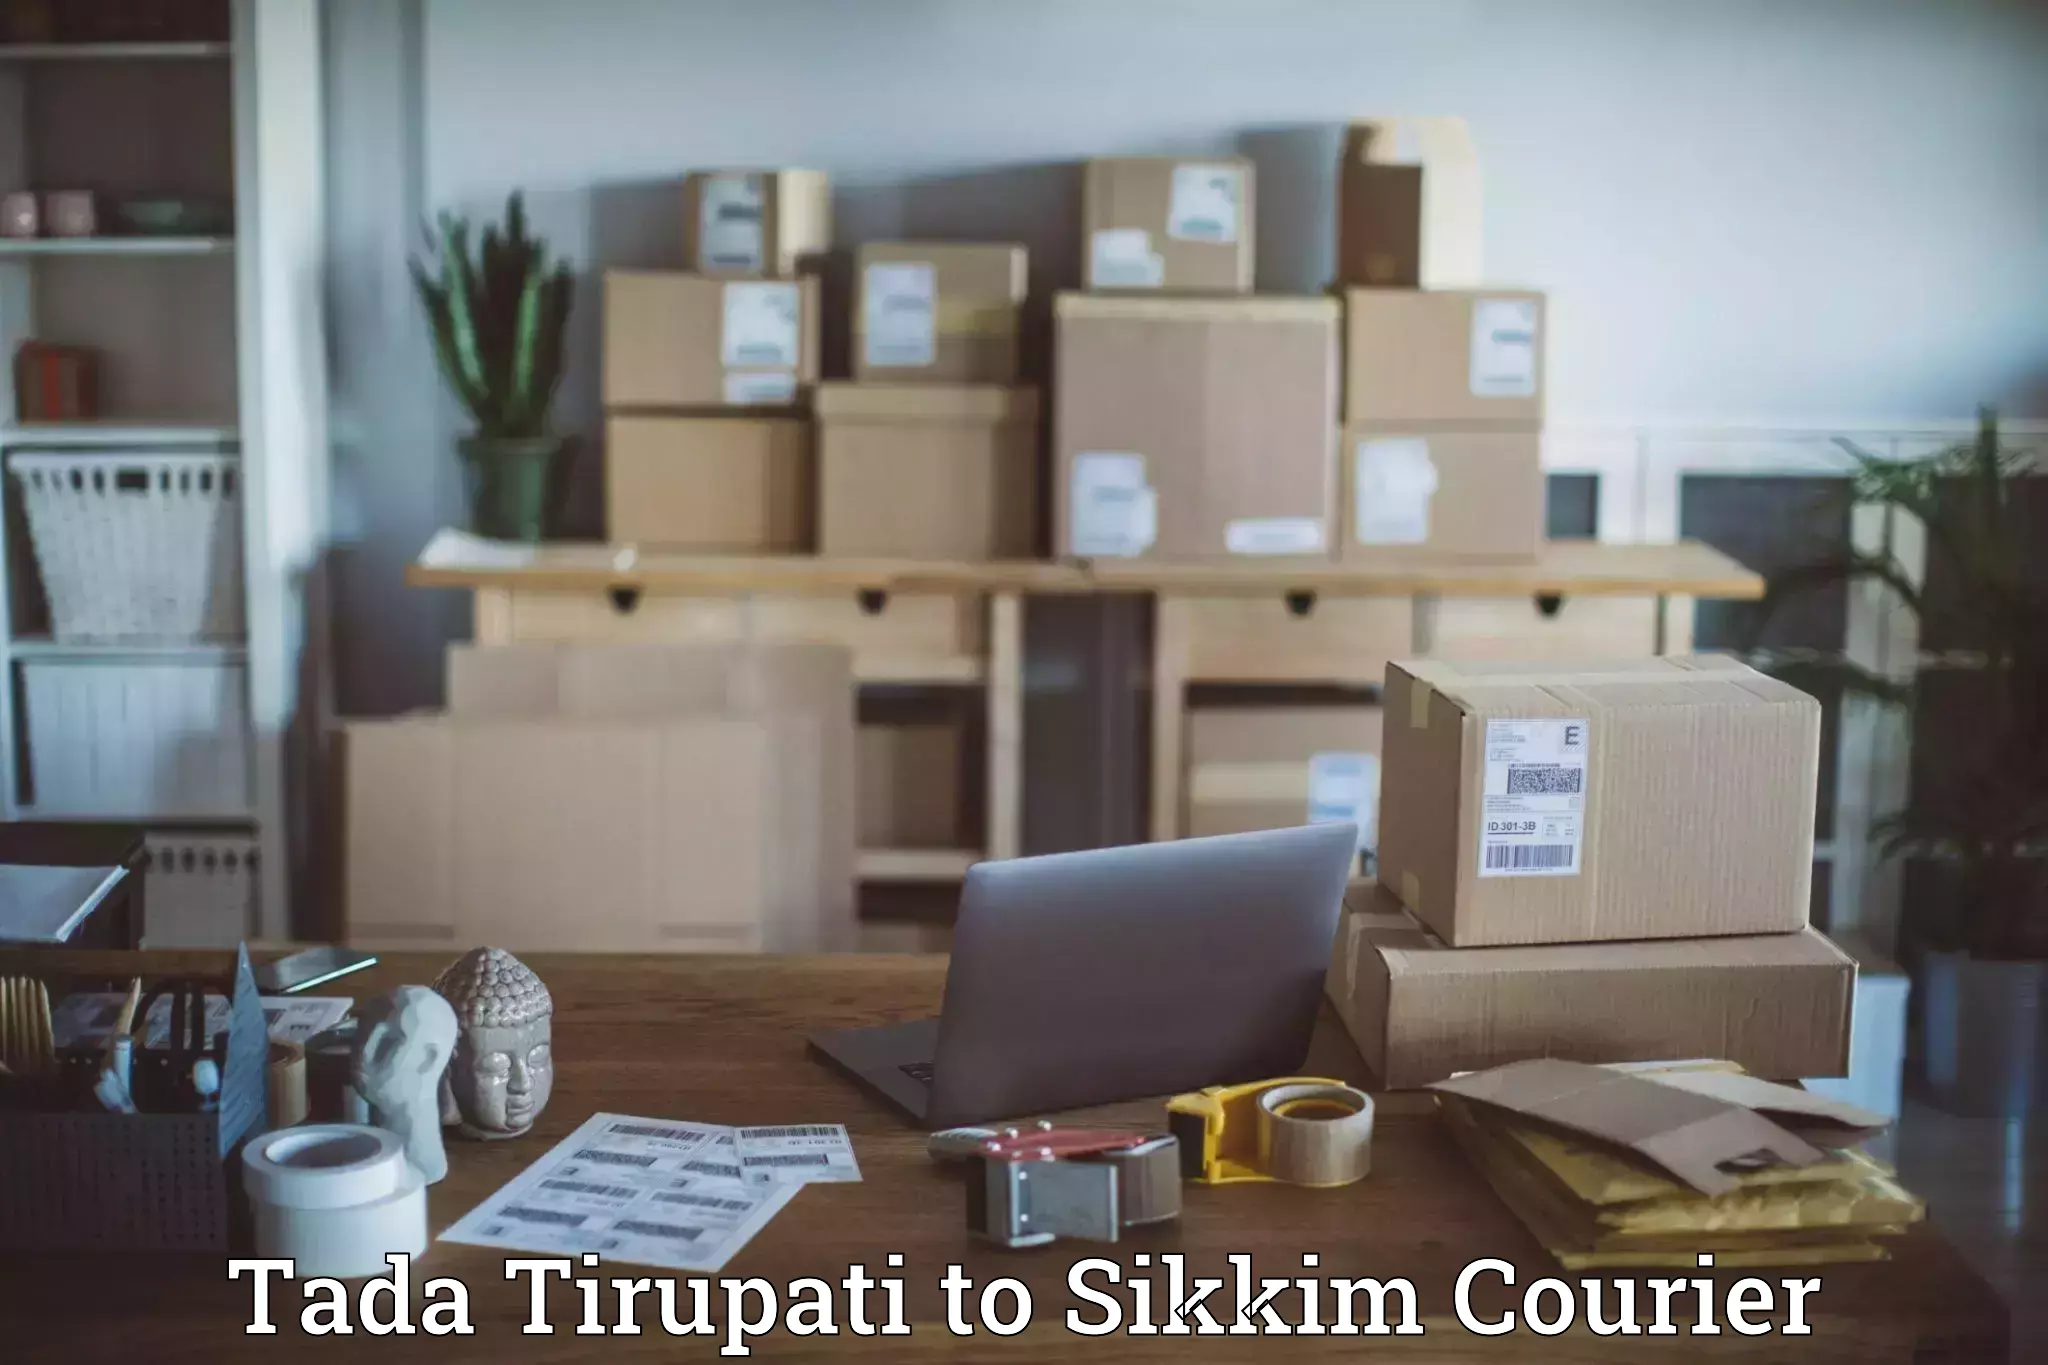 Courier app Tada Tirupati to Pelling